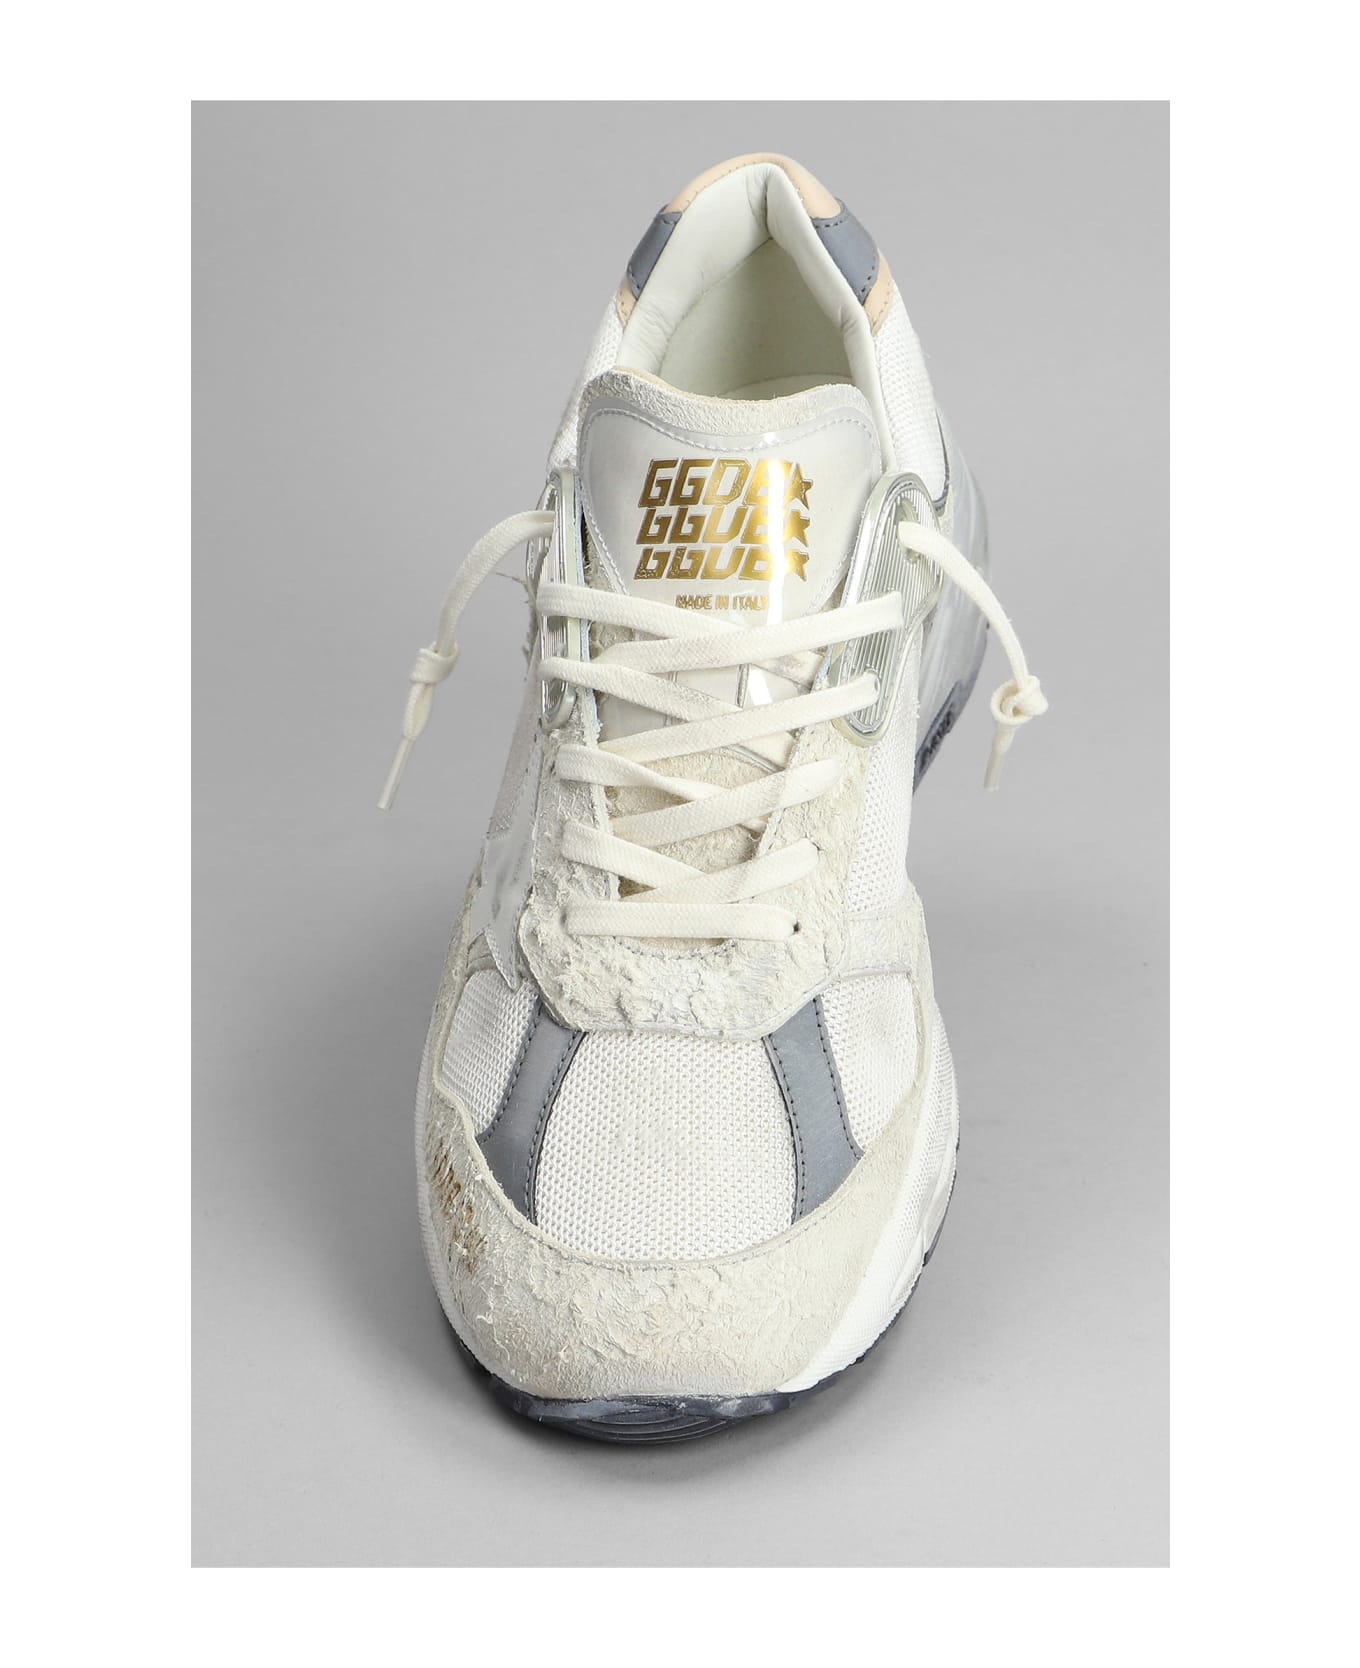 Golden Goose Running Sneakers In White Synthetic Fibers - white スニーカー